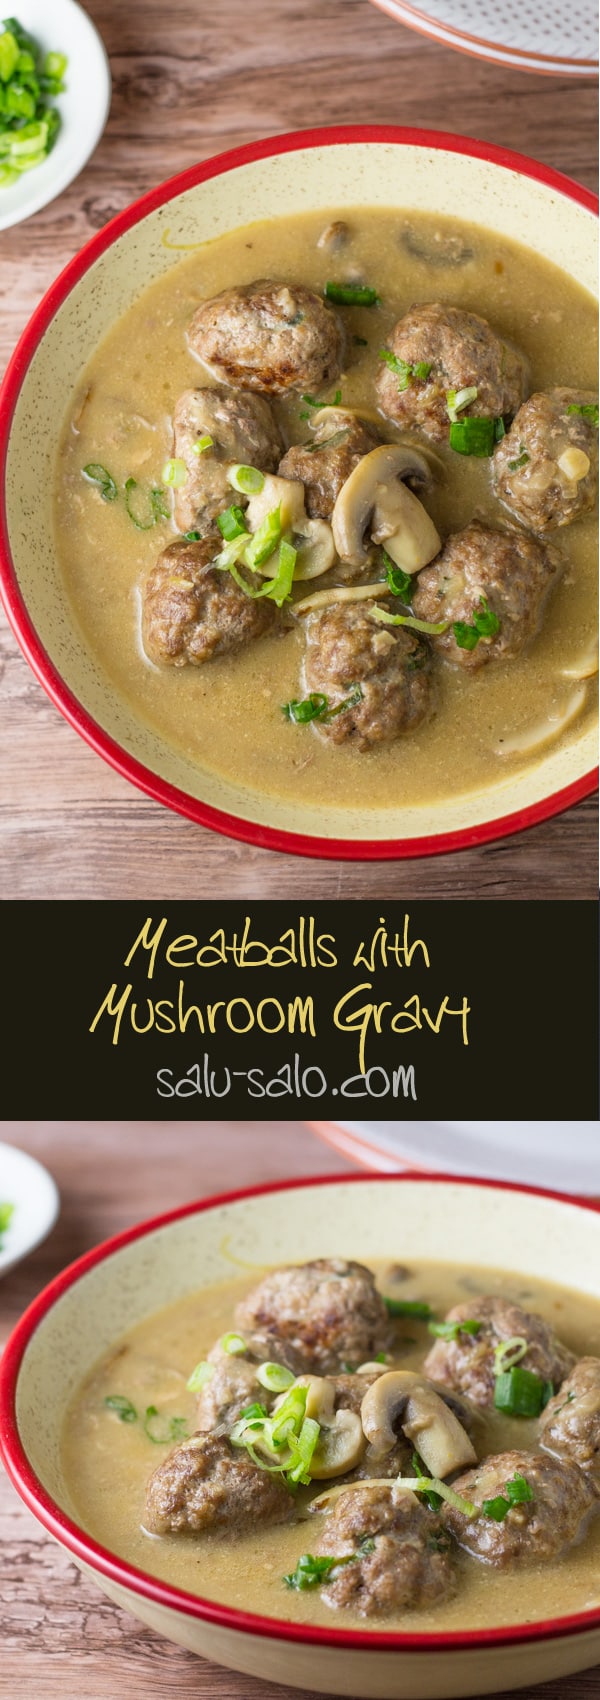 Meatballs with Mushroom Gravy